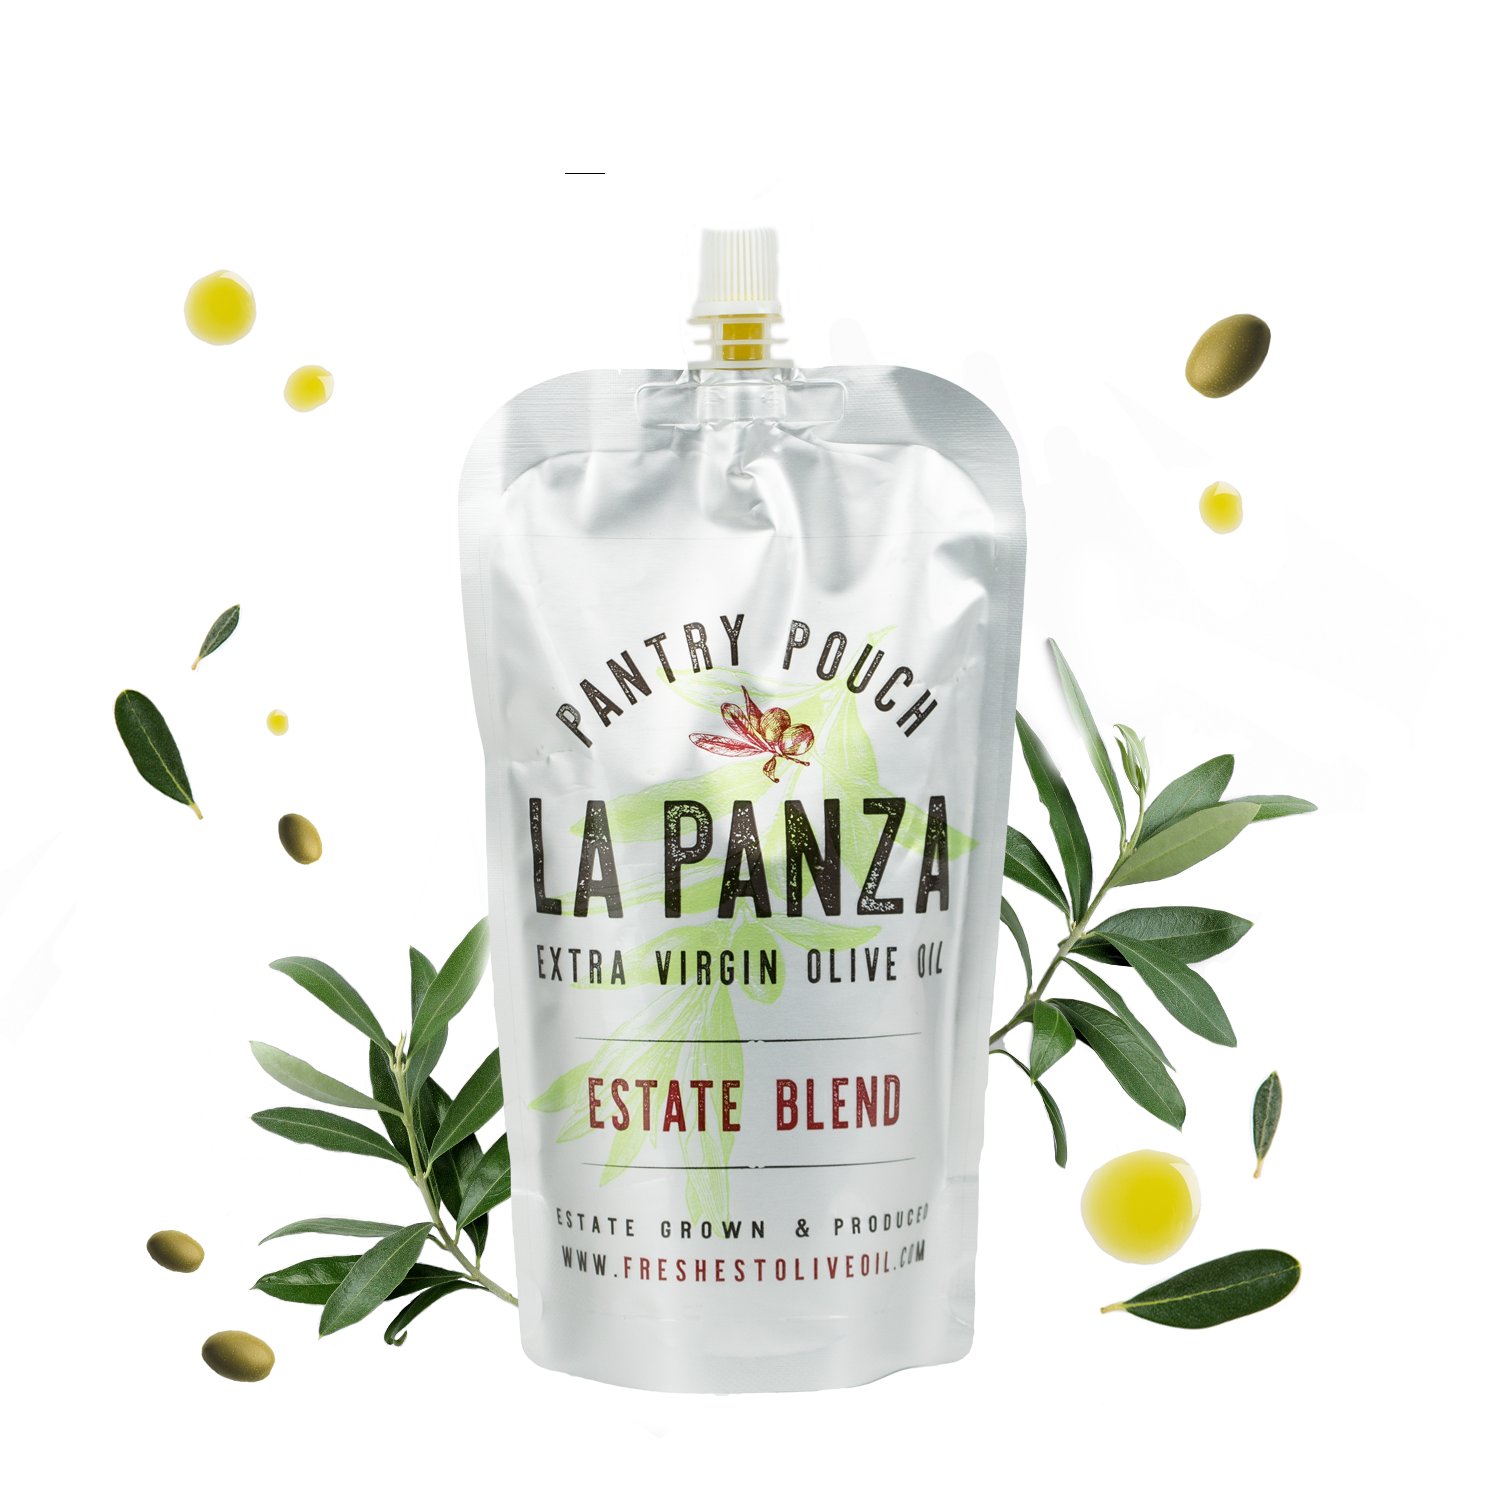 La Panza Extra Virgin Olive Oil Estate Blend